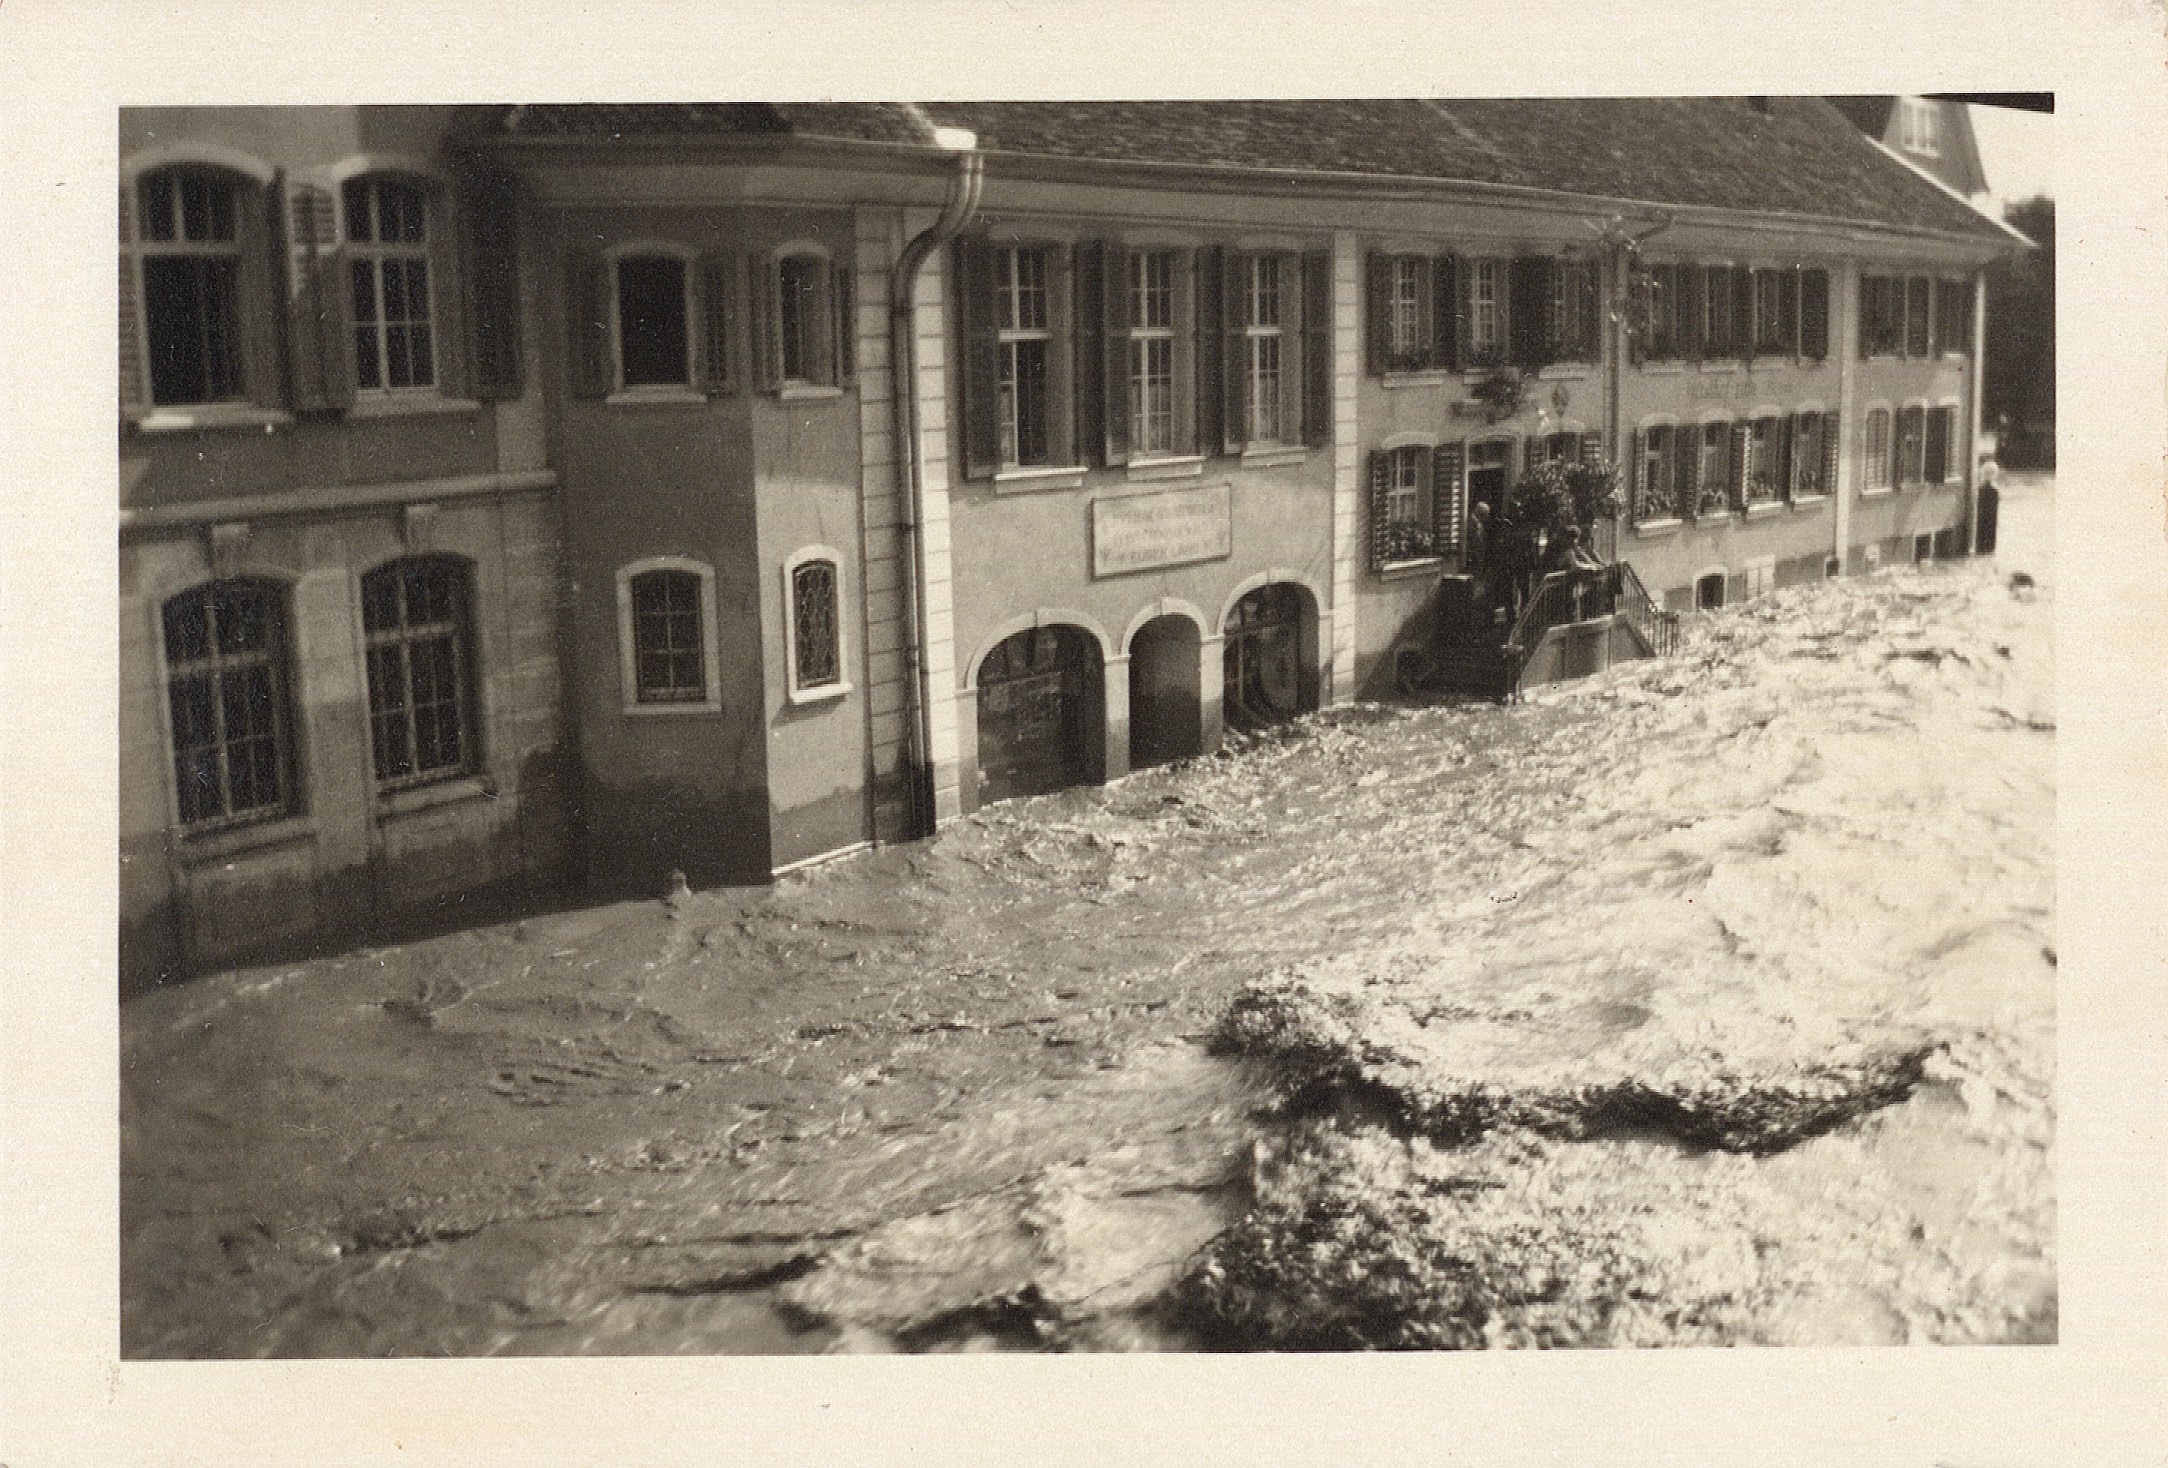 Fig. 5: Flood waters rise in Balsthal, Switzerland, in 1926. Credit: ETH-Bibliothek Zürich, Bildarchiv / Fotograf: Unbekannt / Ans_05140-008-AL / Public Domain Mark. http://doi.org/10.3932/ethz-a-000038141